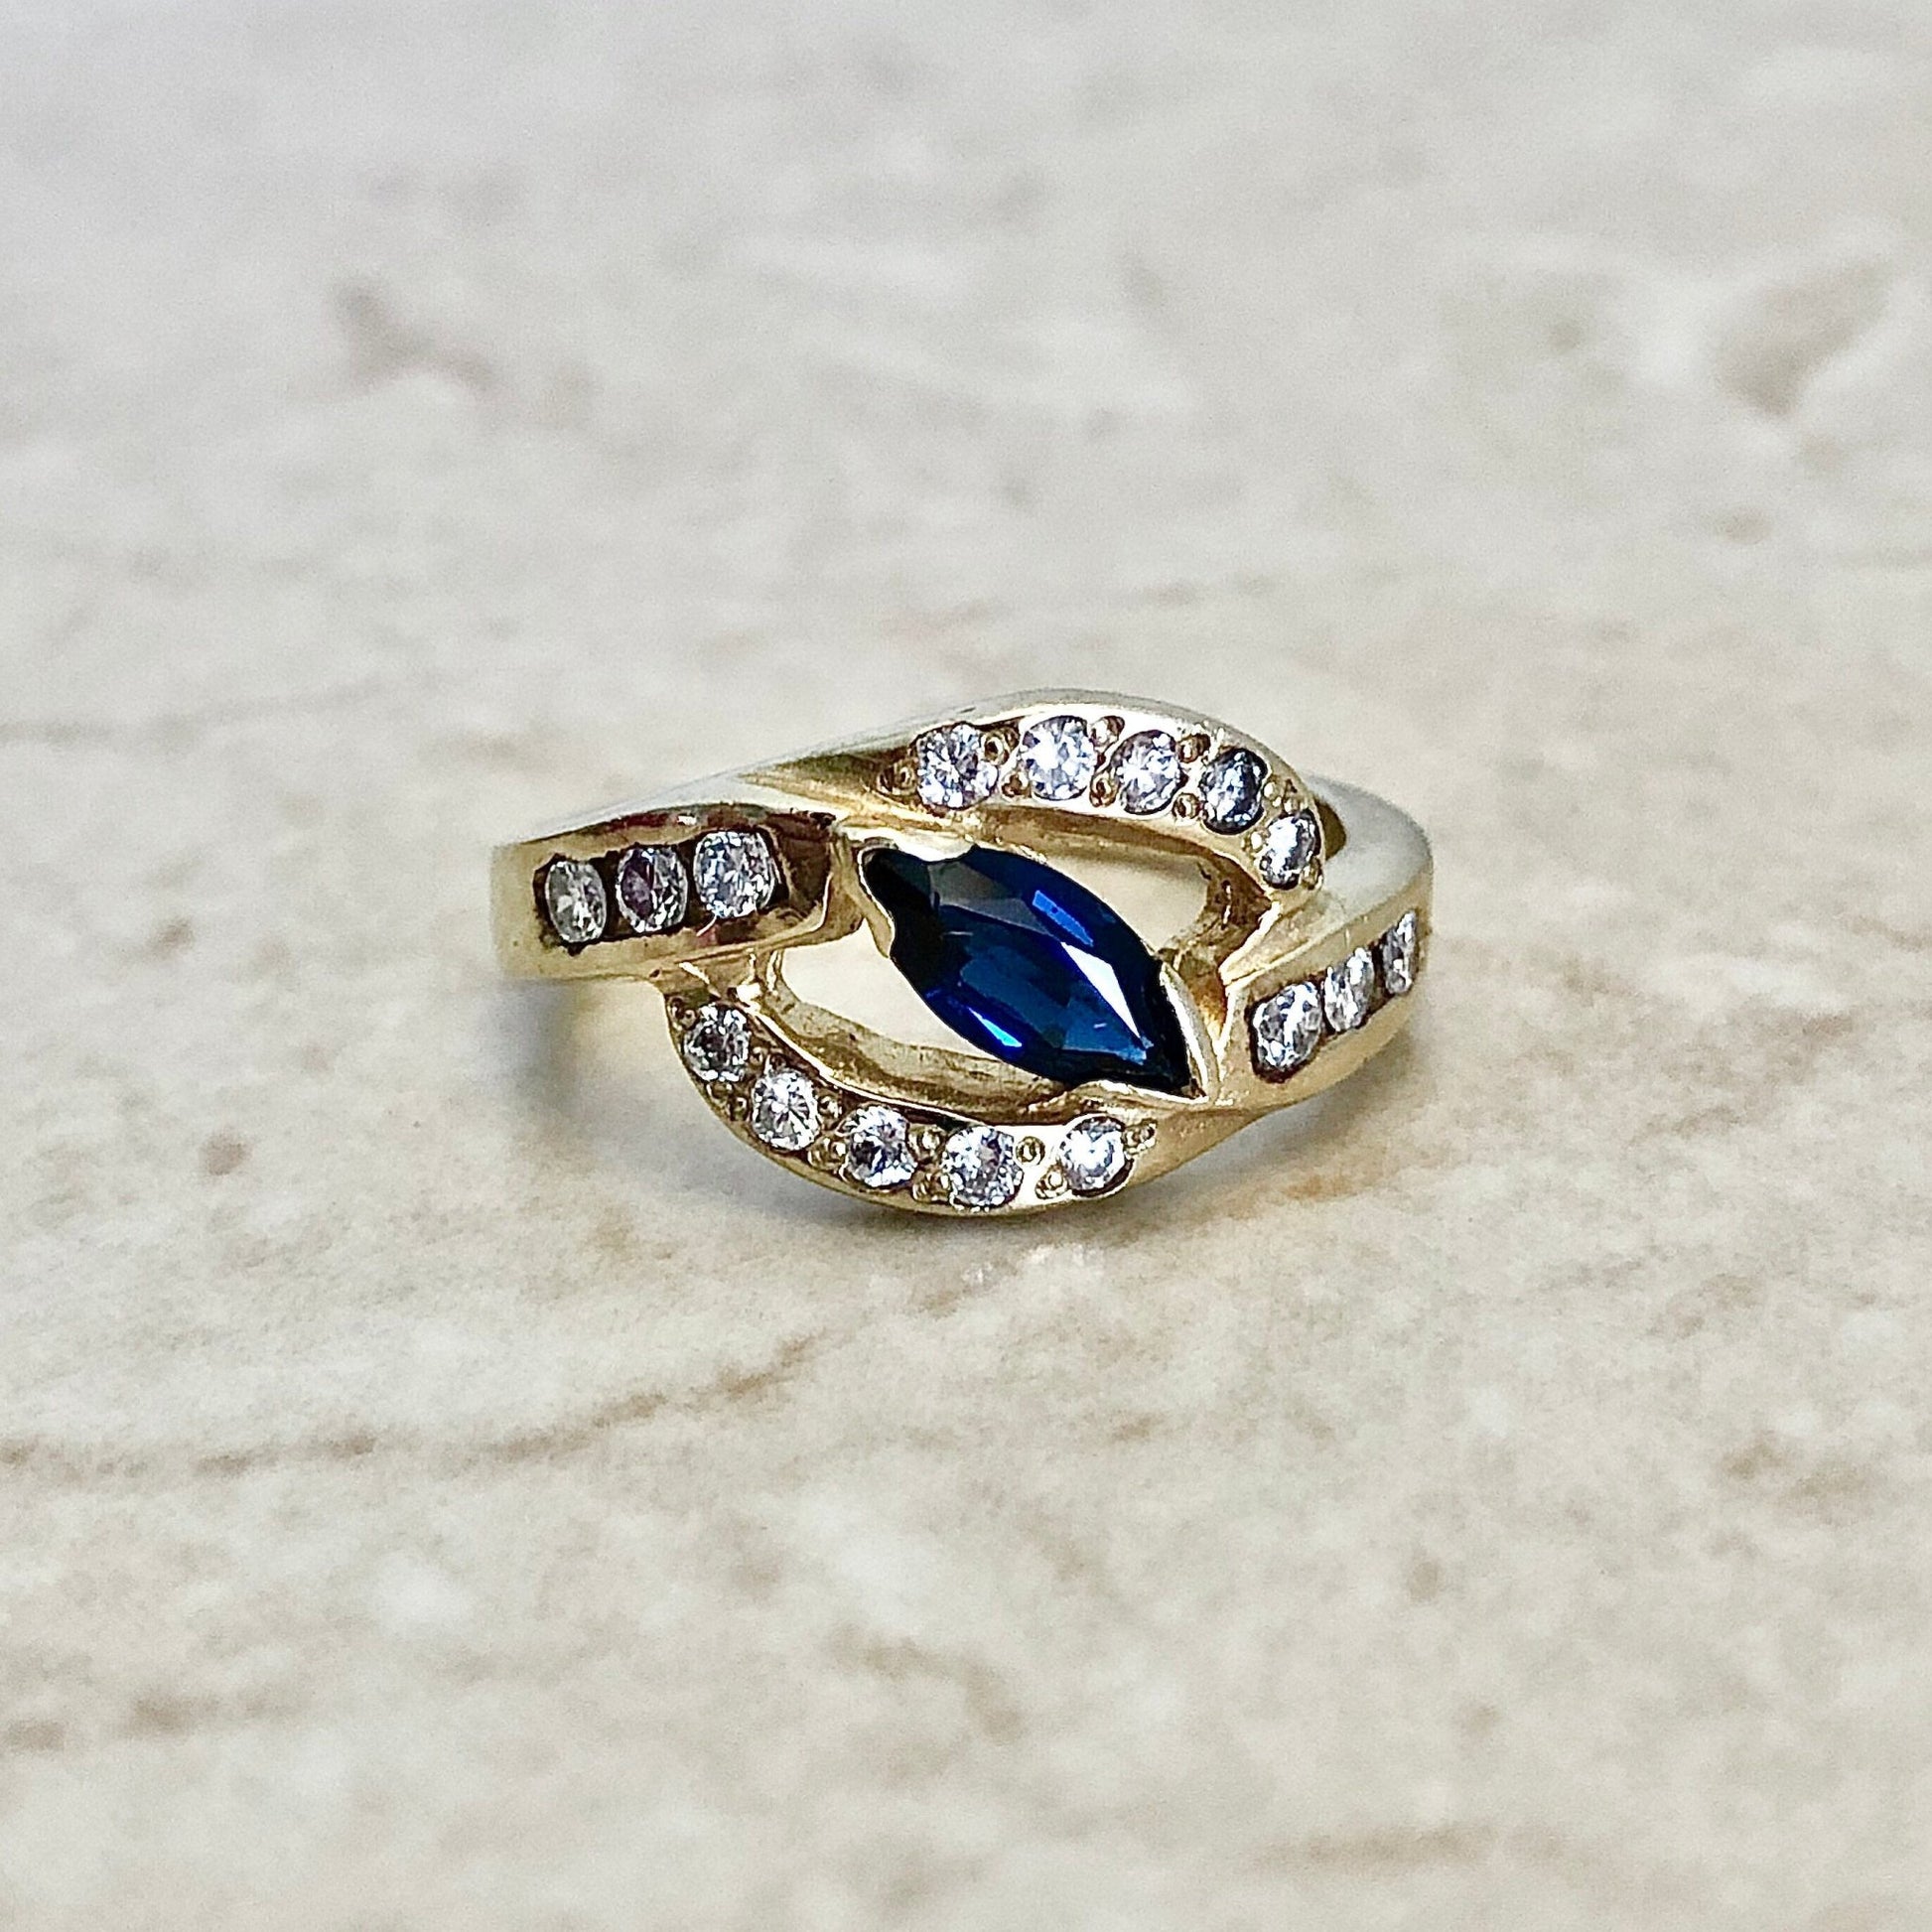 Vintage 14K Sapphire & Diamond Cocktail Ring - Yellow Gold - Promise Ring - Anniversary Ring - September Birthstone - Birthday Gift